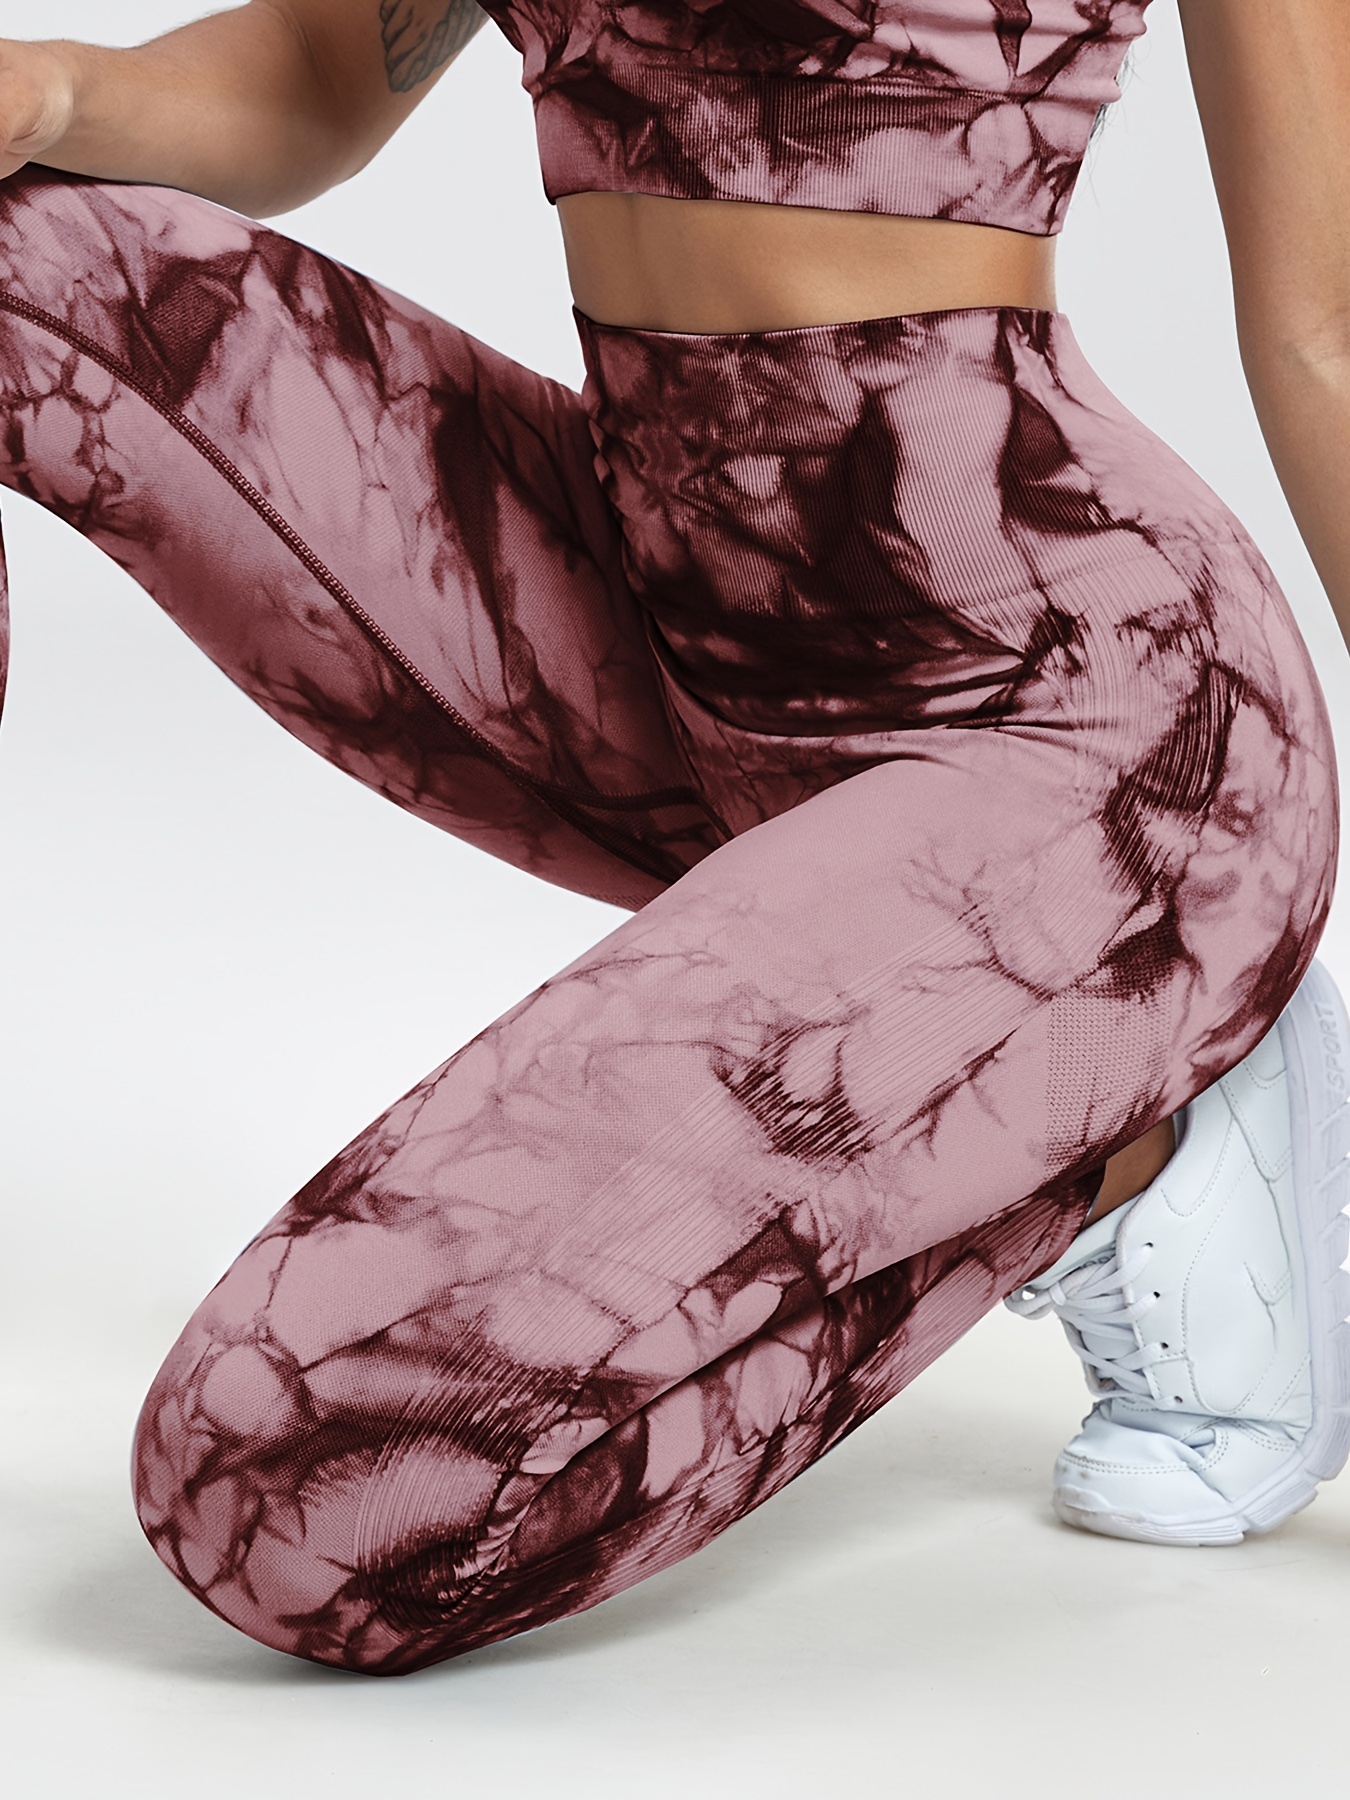 Seamless Tie Dye Leggings Women for Fitness Yoga Pants Push Up Workout